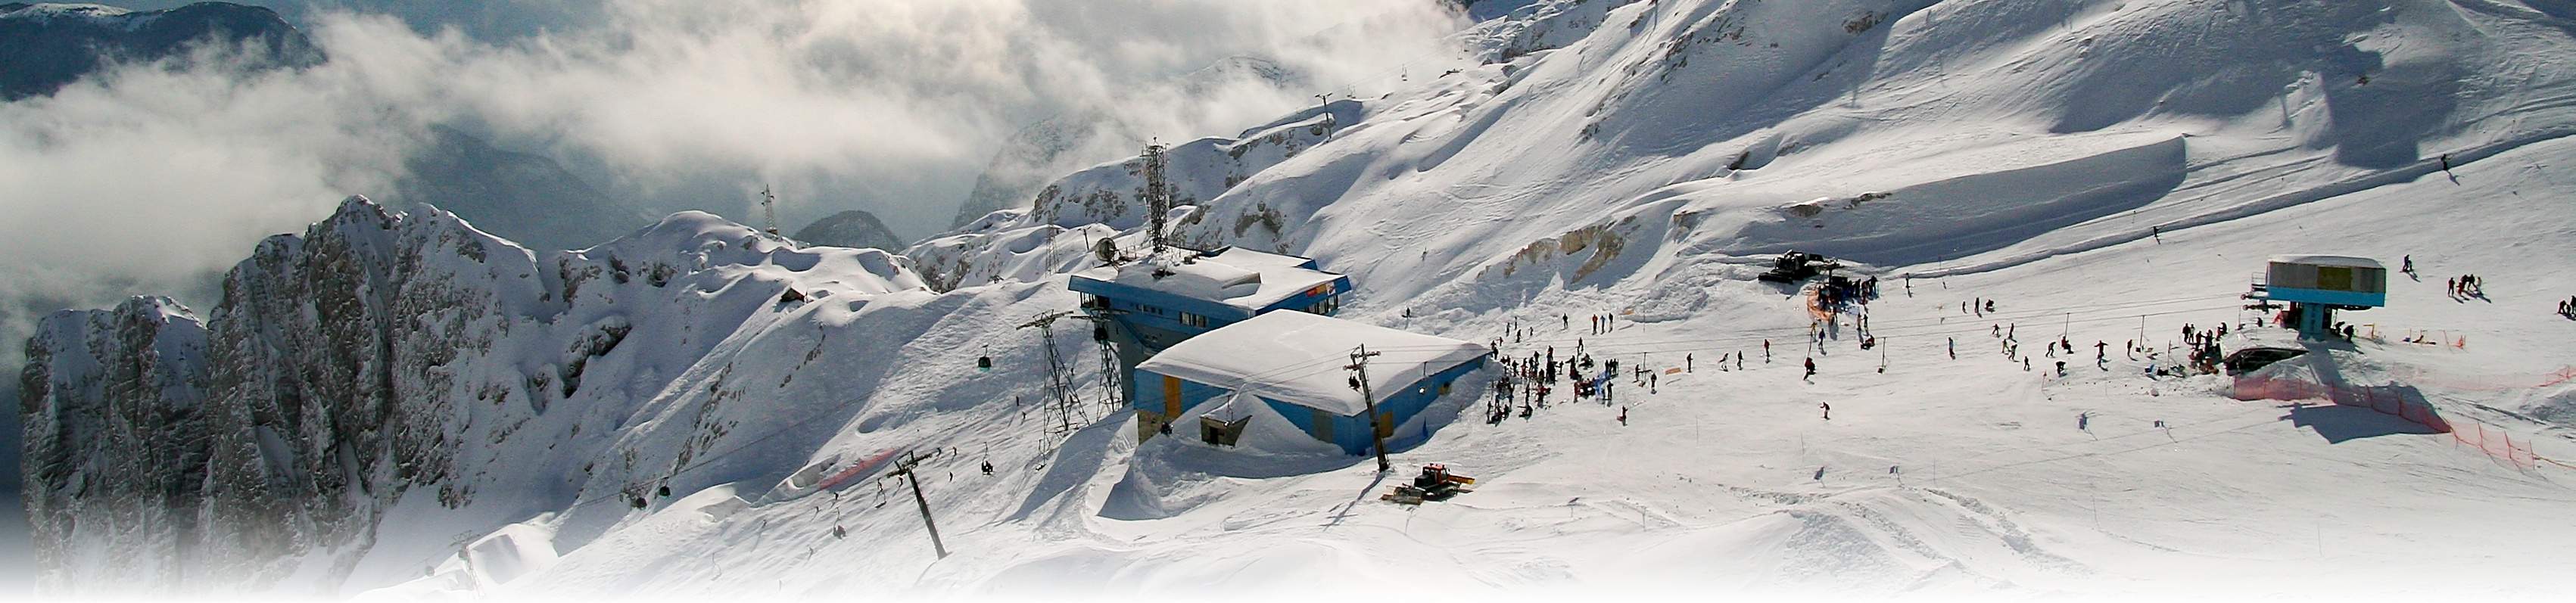 Bovec Kanin - Sella Nevea Ski Resort